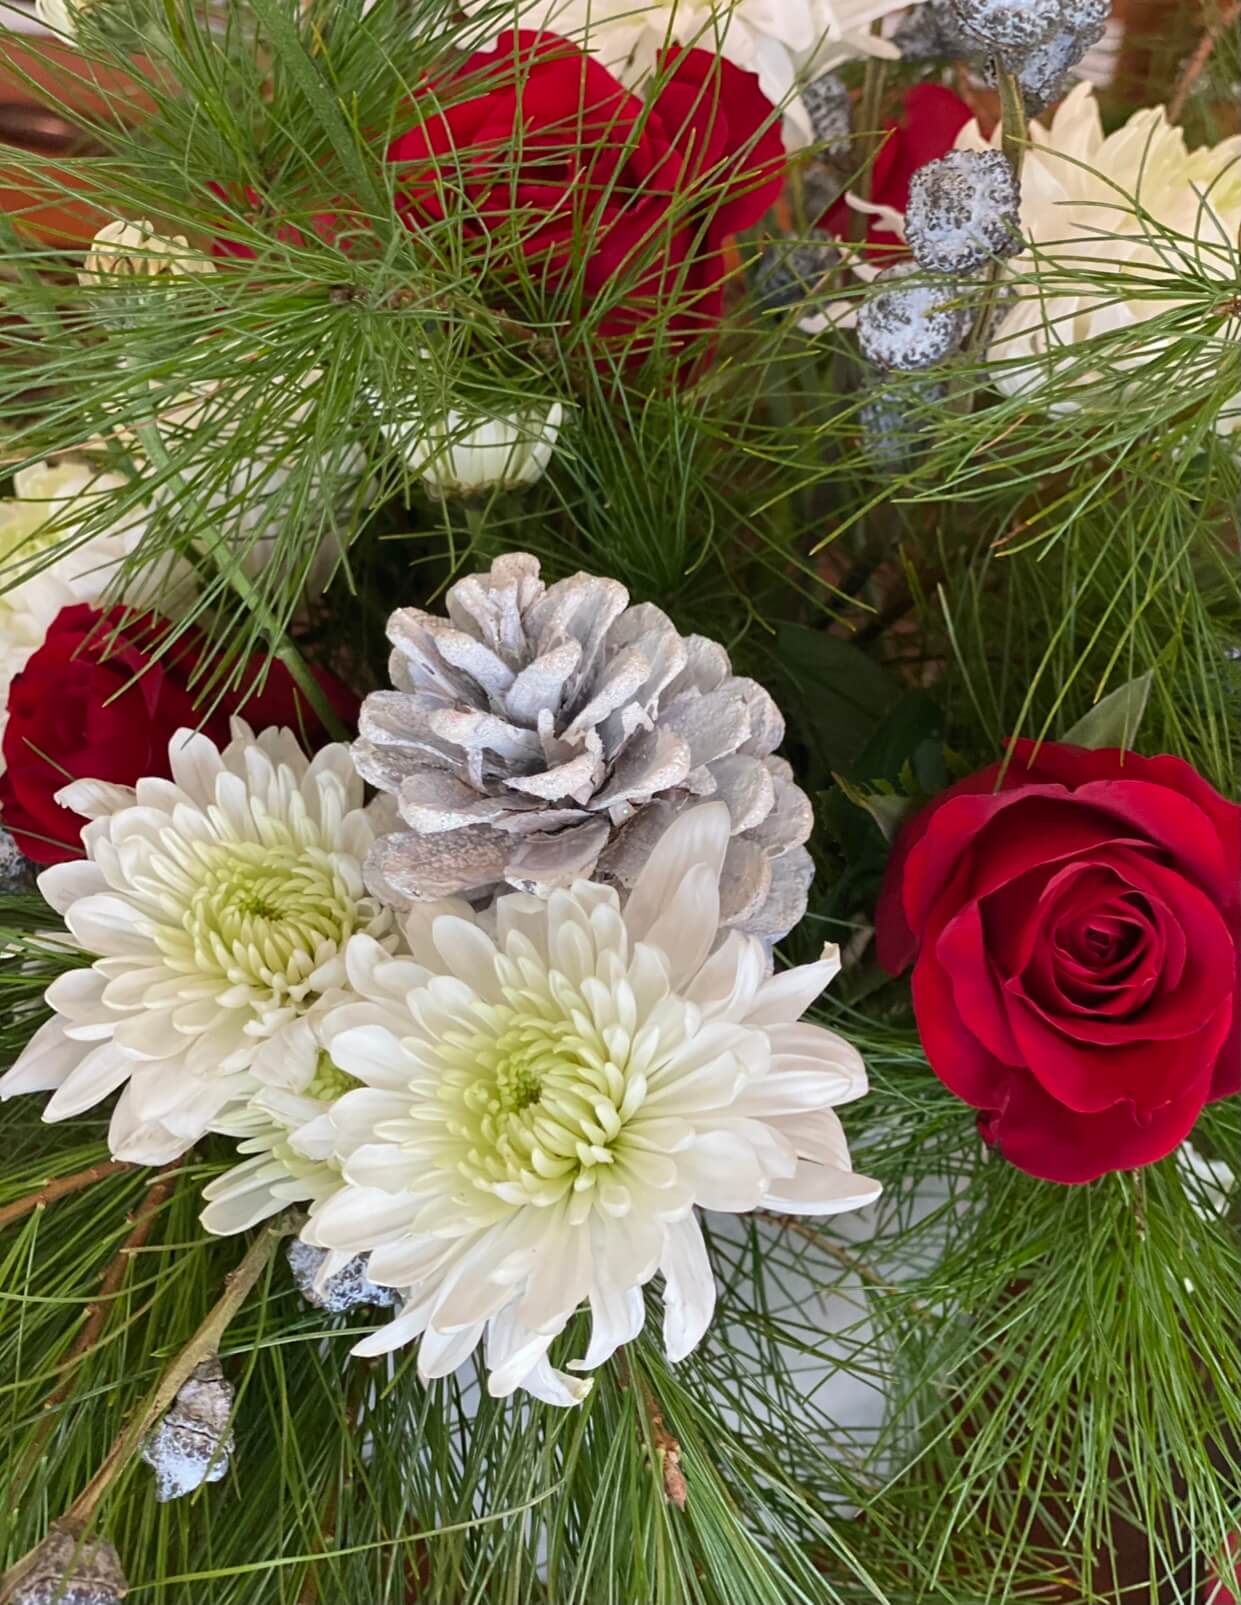 Image of a winter floral arrangement